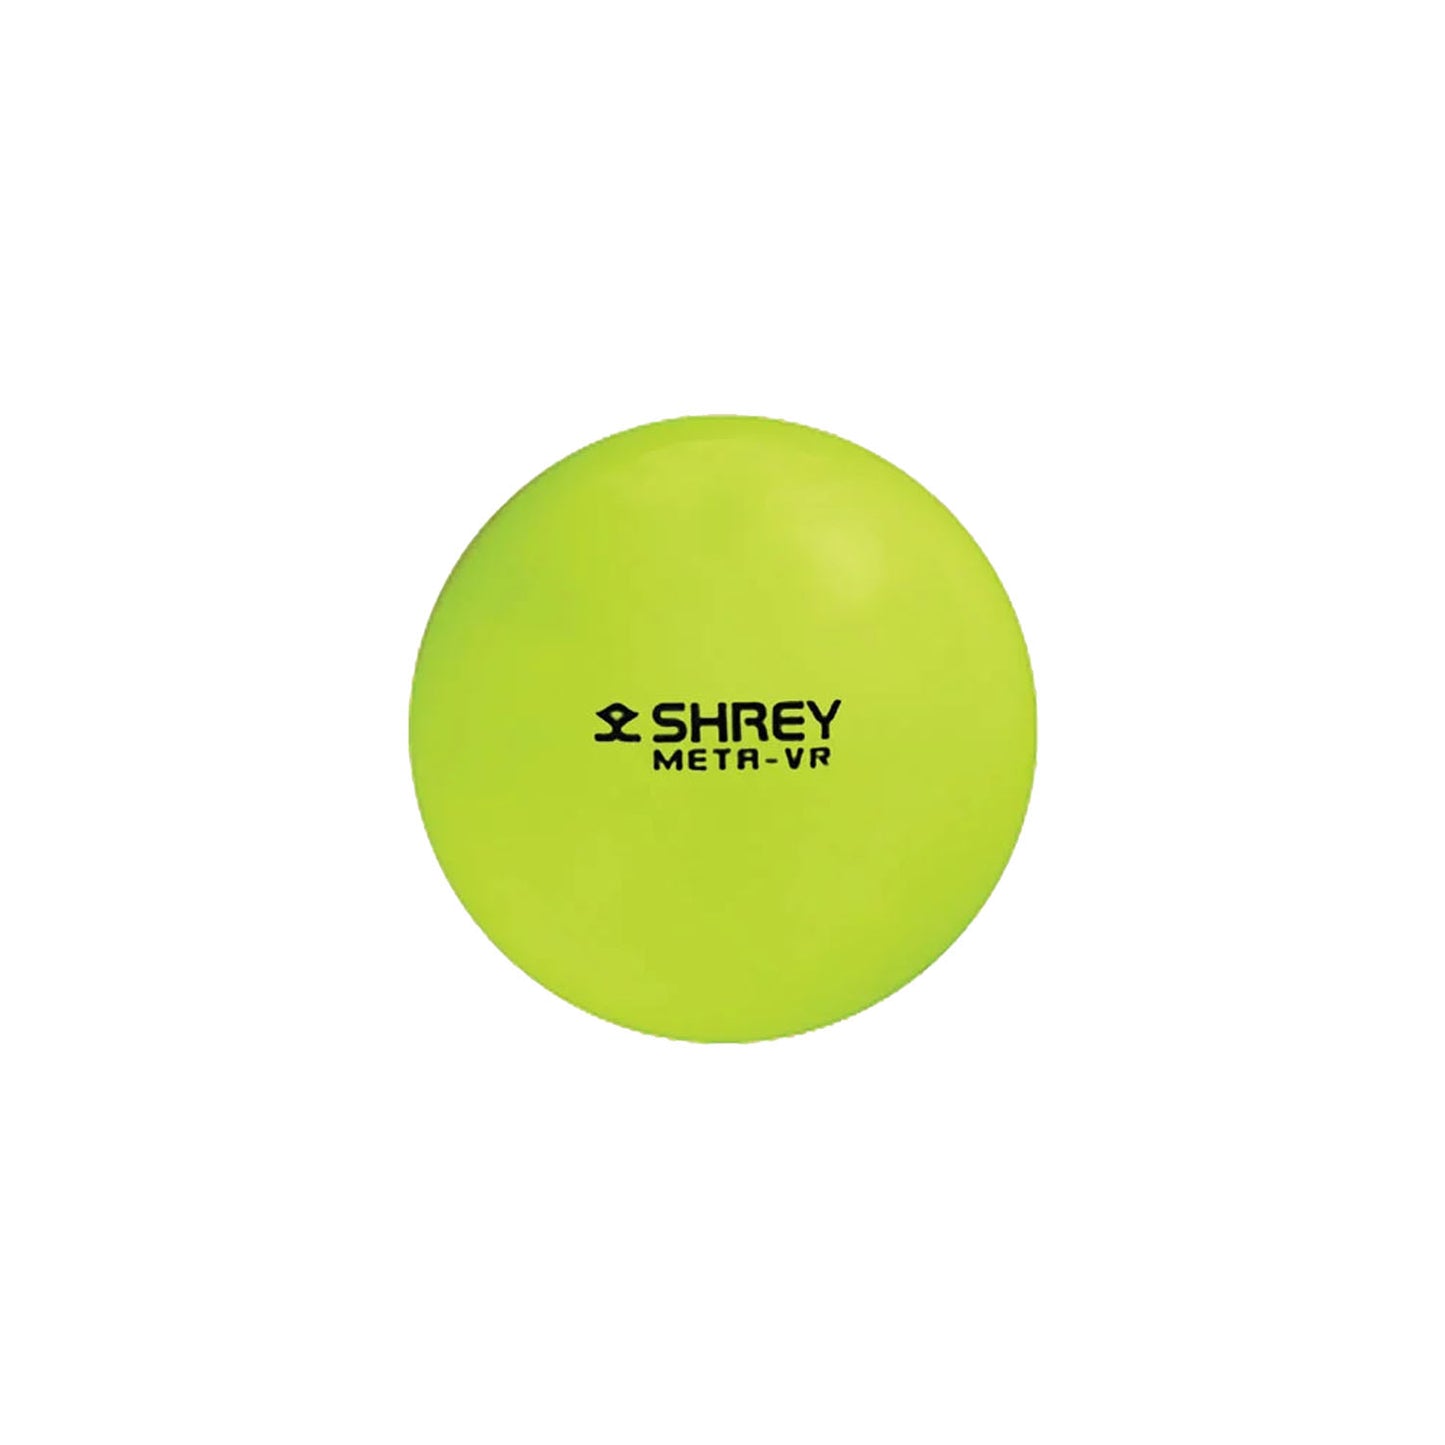 Shrey Meta VR Plain Hockey Ball - Best Price online Prokicksports.com